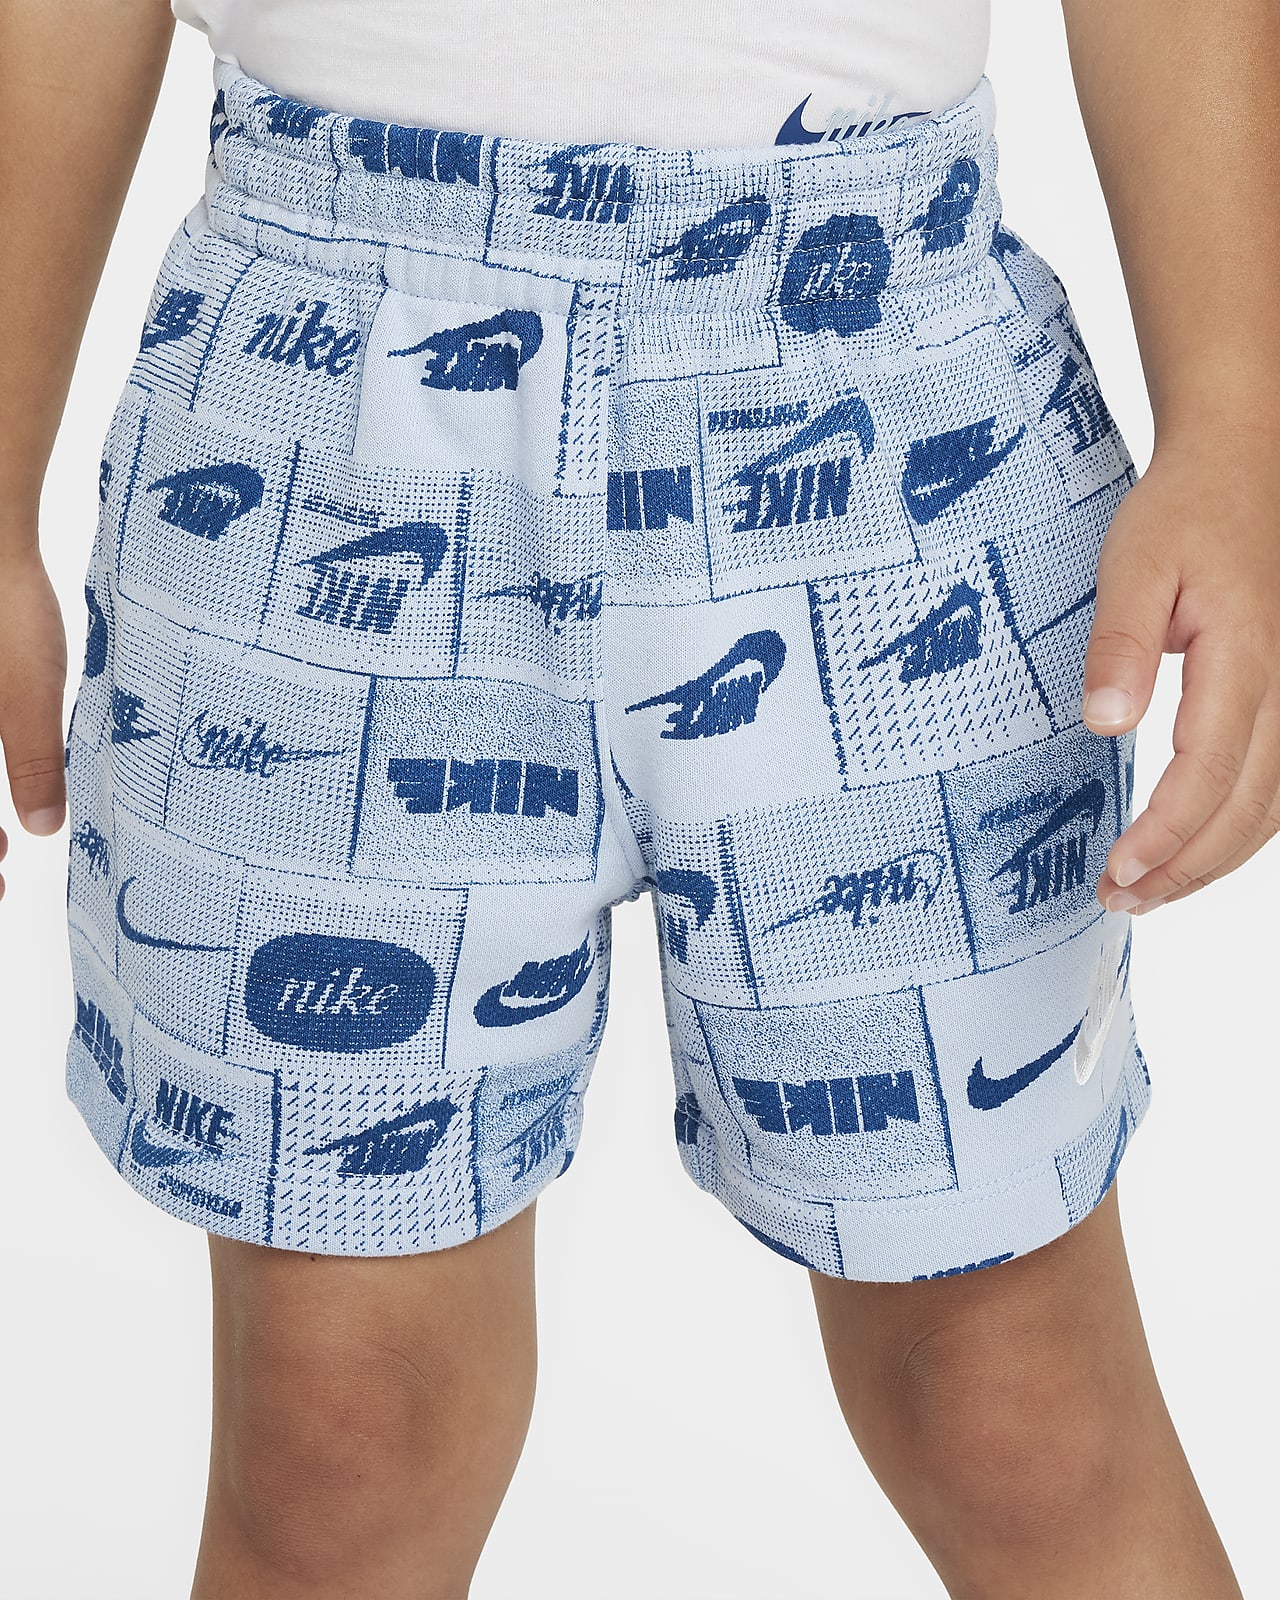 Toddler Printed Nike Club Shorts. Sportswear